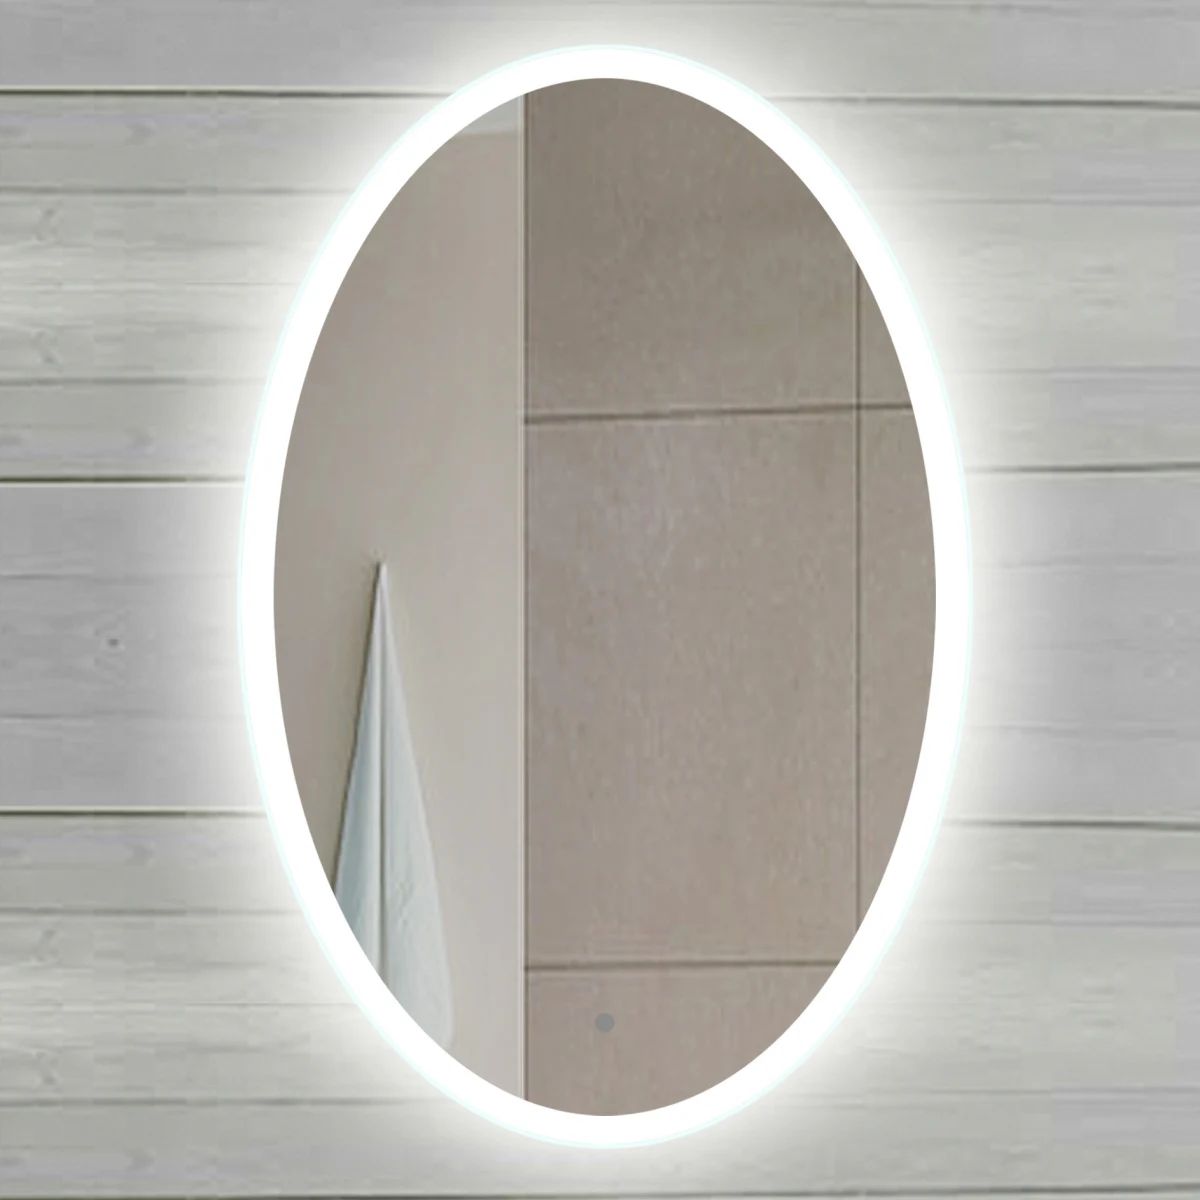 24" W x 36" H Oval Frameless Wall Mounted Mirror with LED Lighting and IR Sensor | Build.com, Inc.